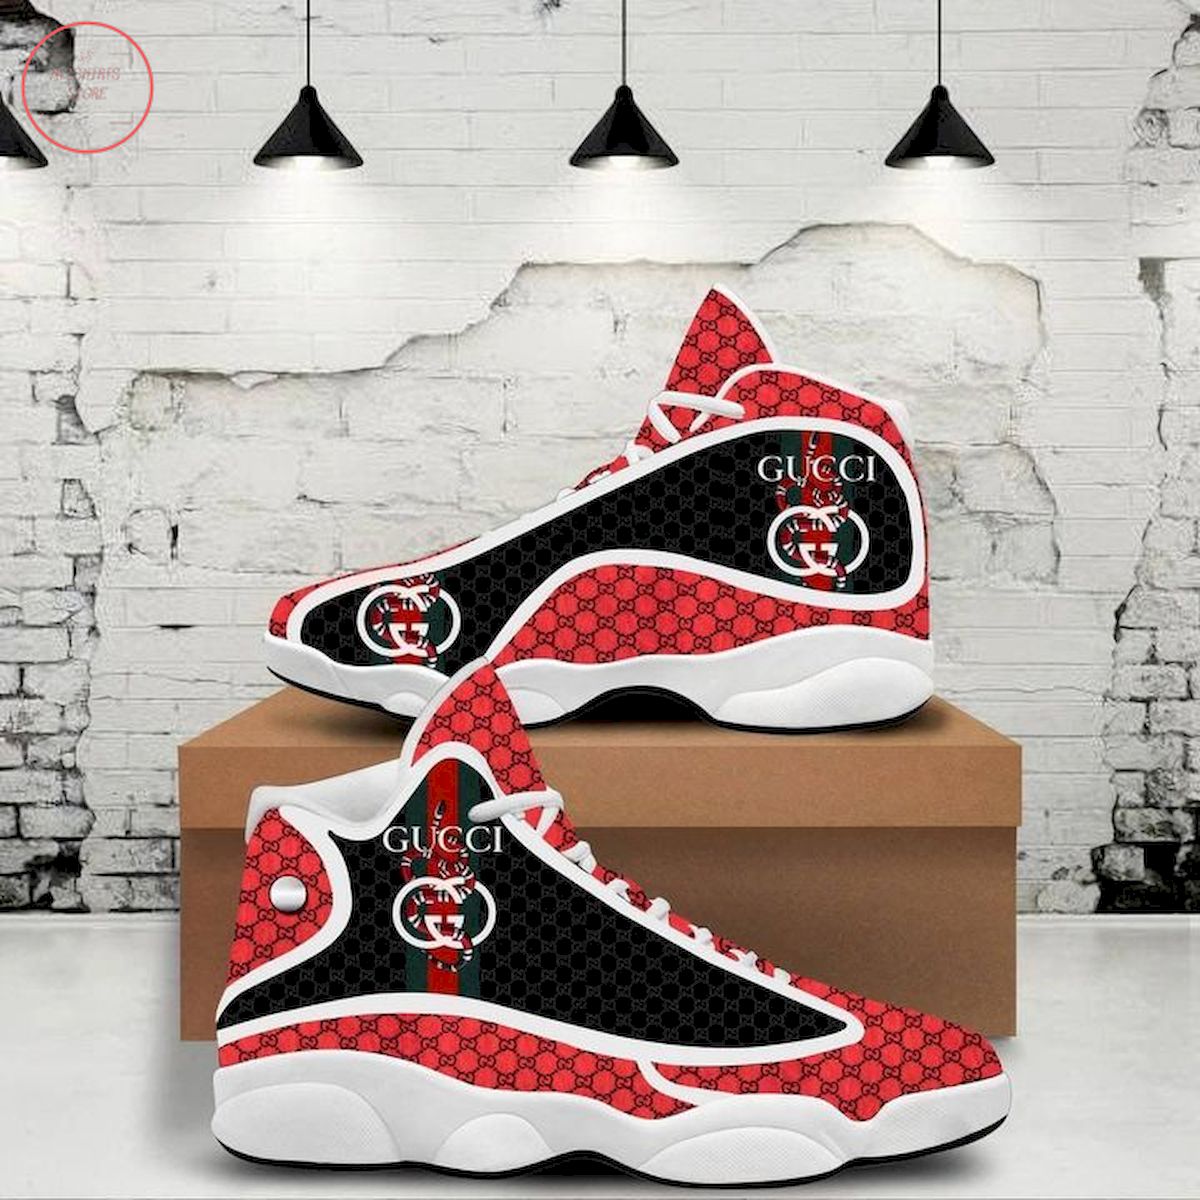 Gucci Italy Luxury Snake Air Jordan 13 Sneaker Shoes